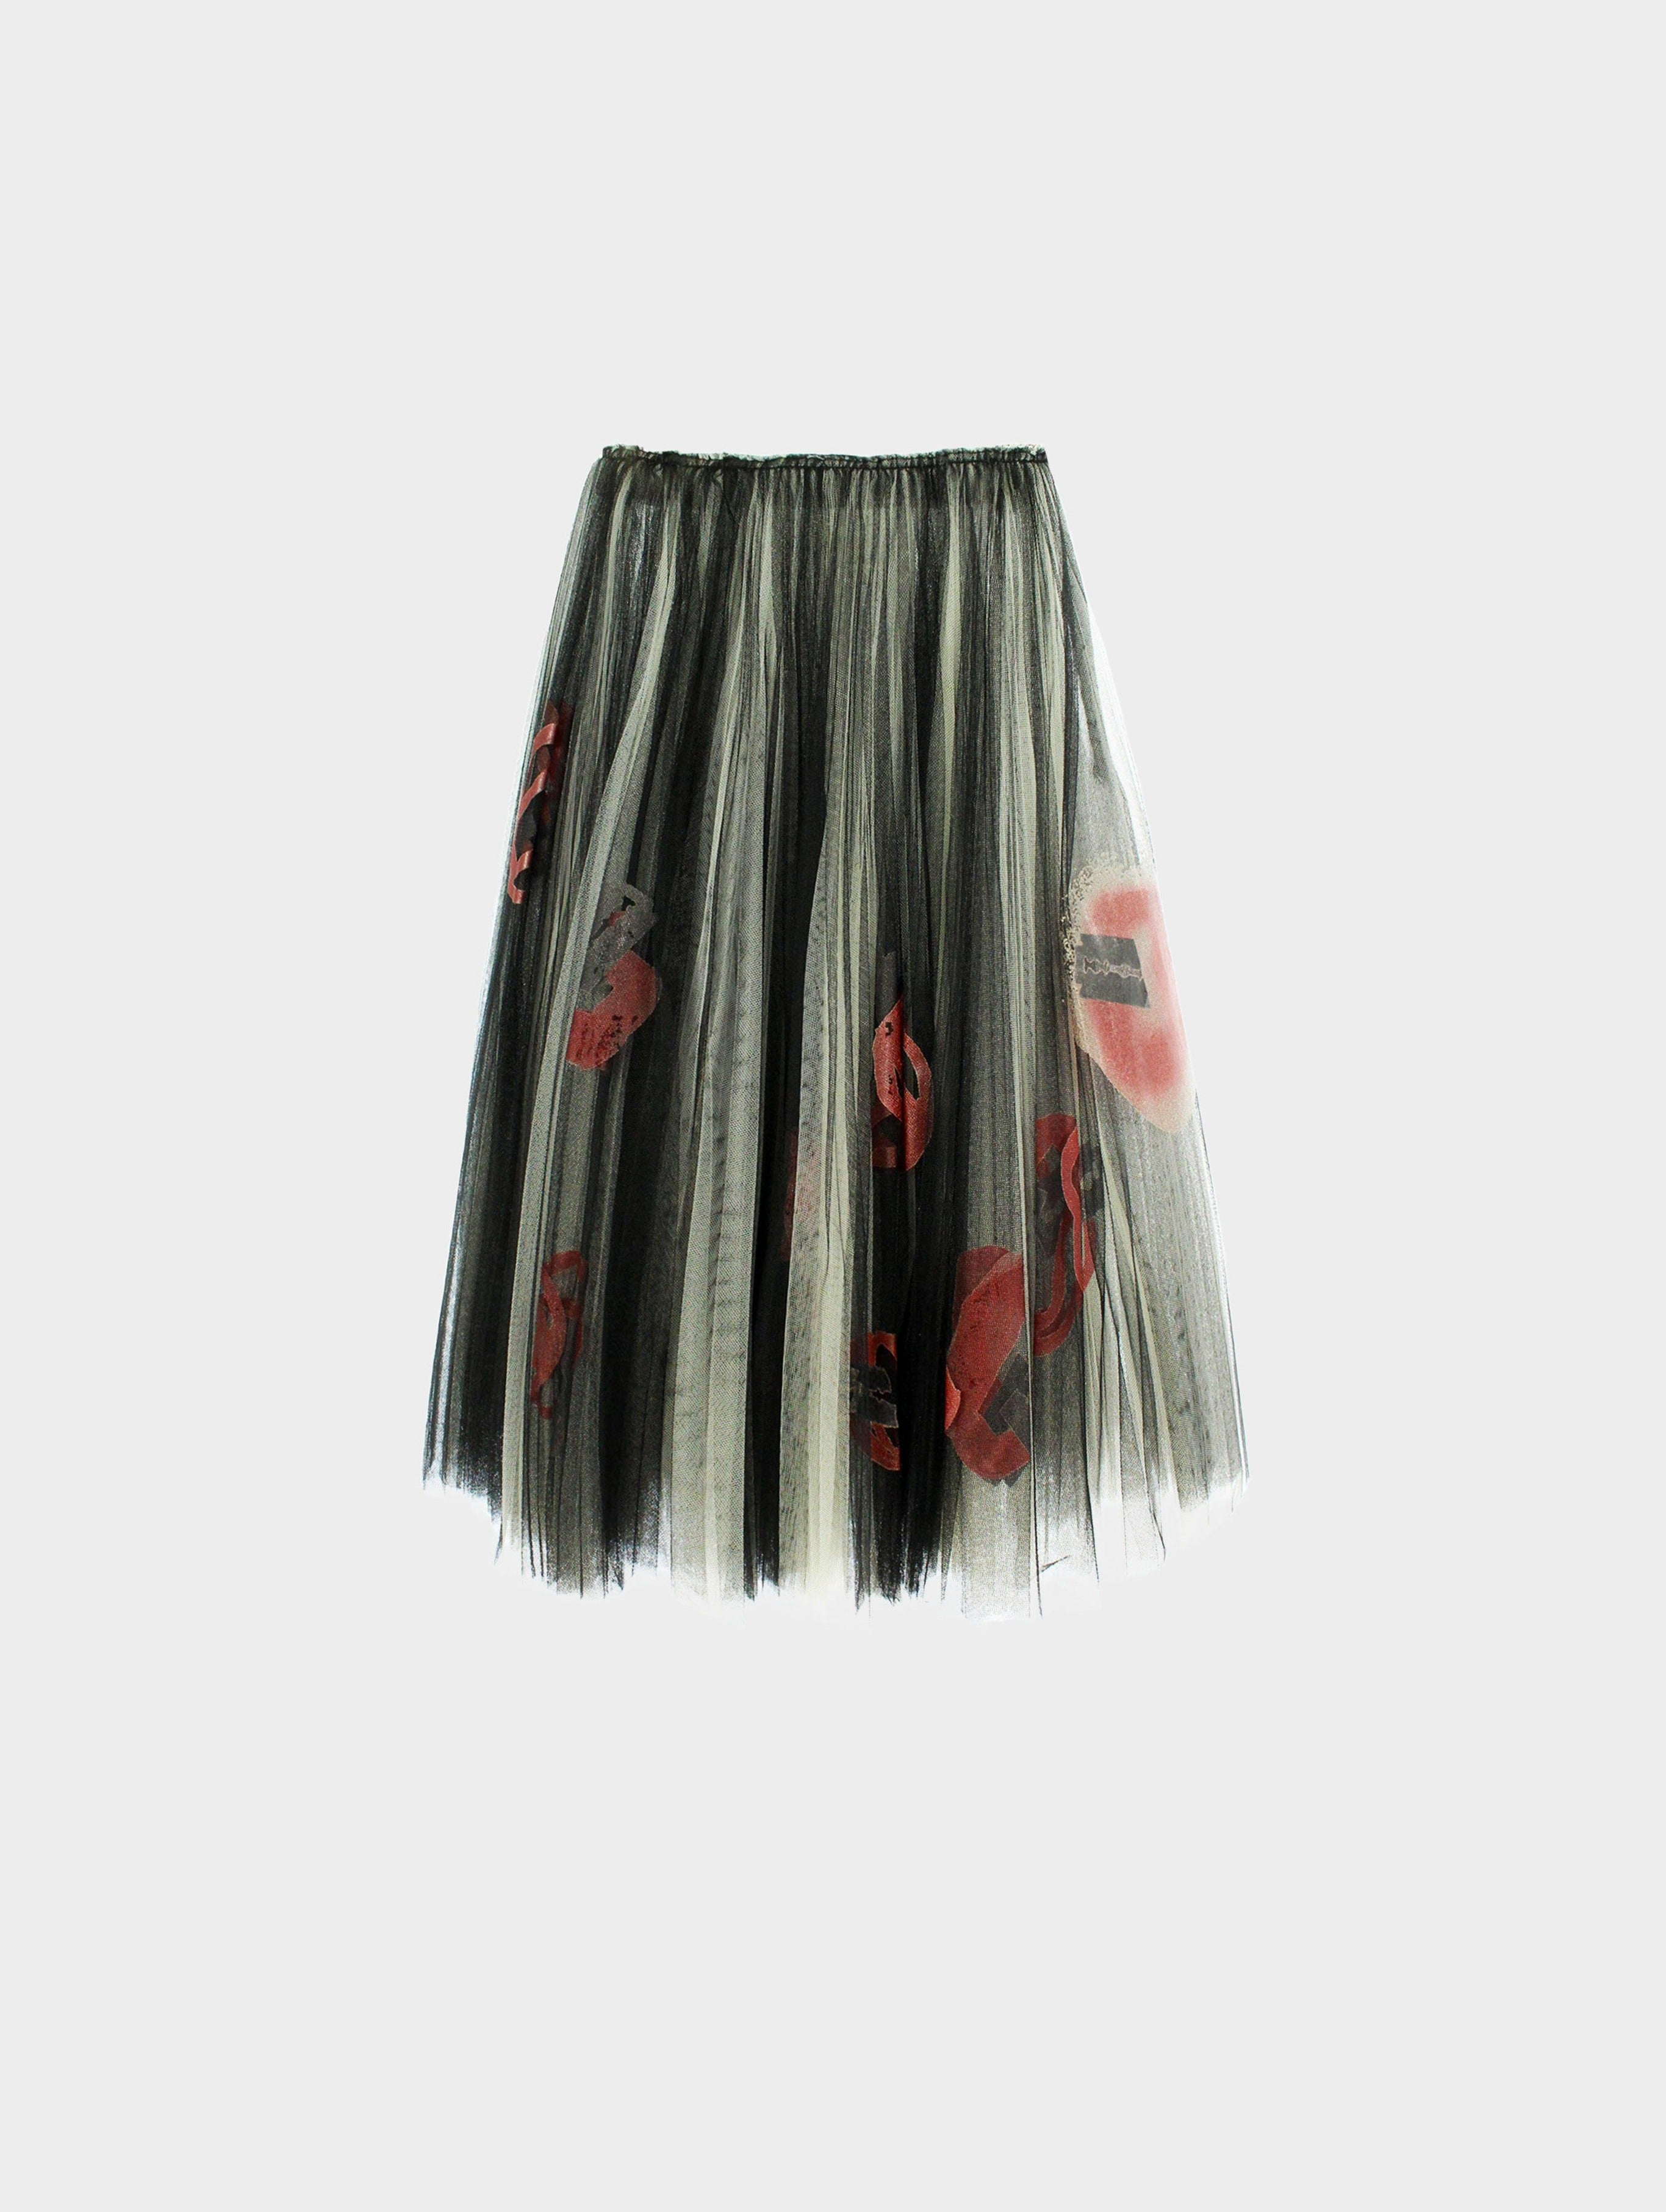 Comme des Garçons A/W 2000 Printed Tulle Skirt